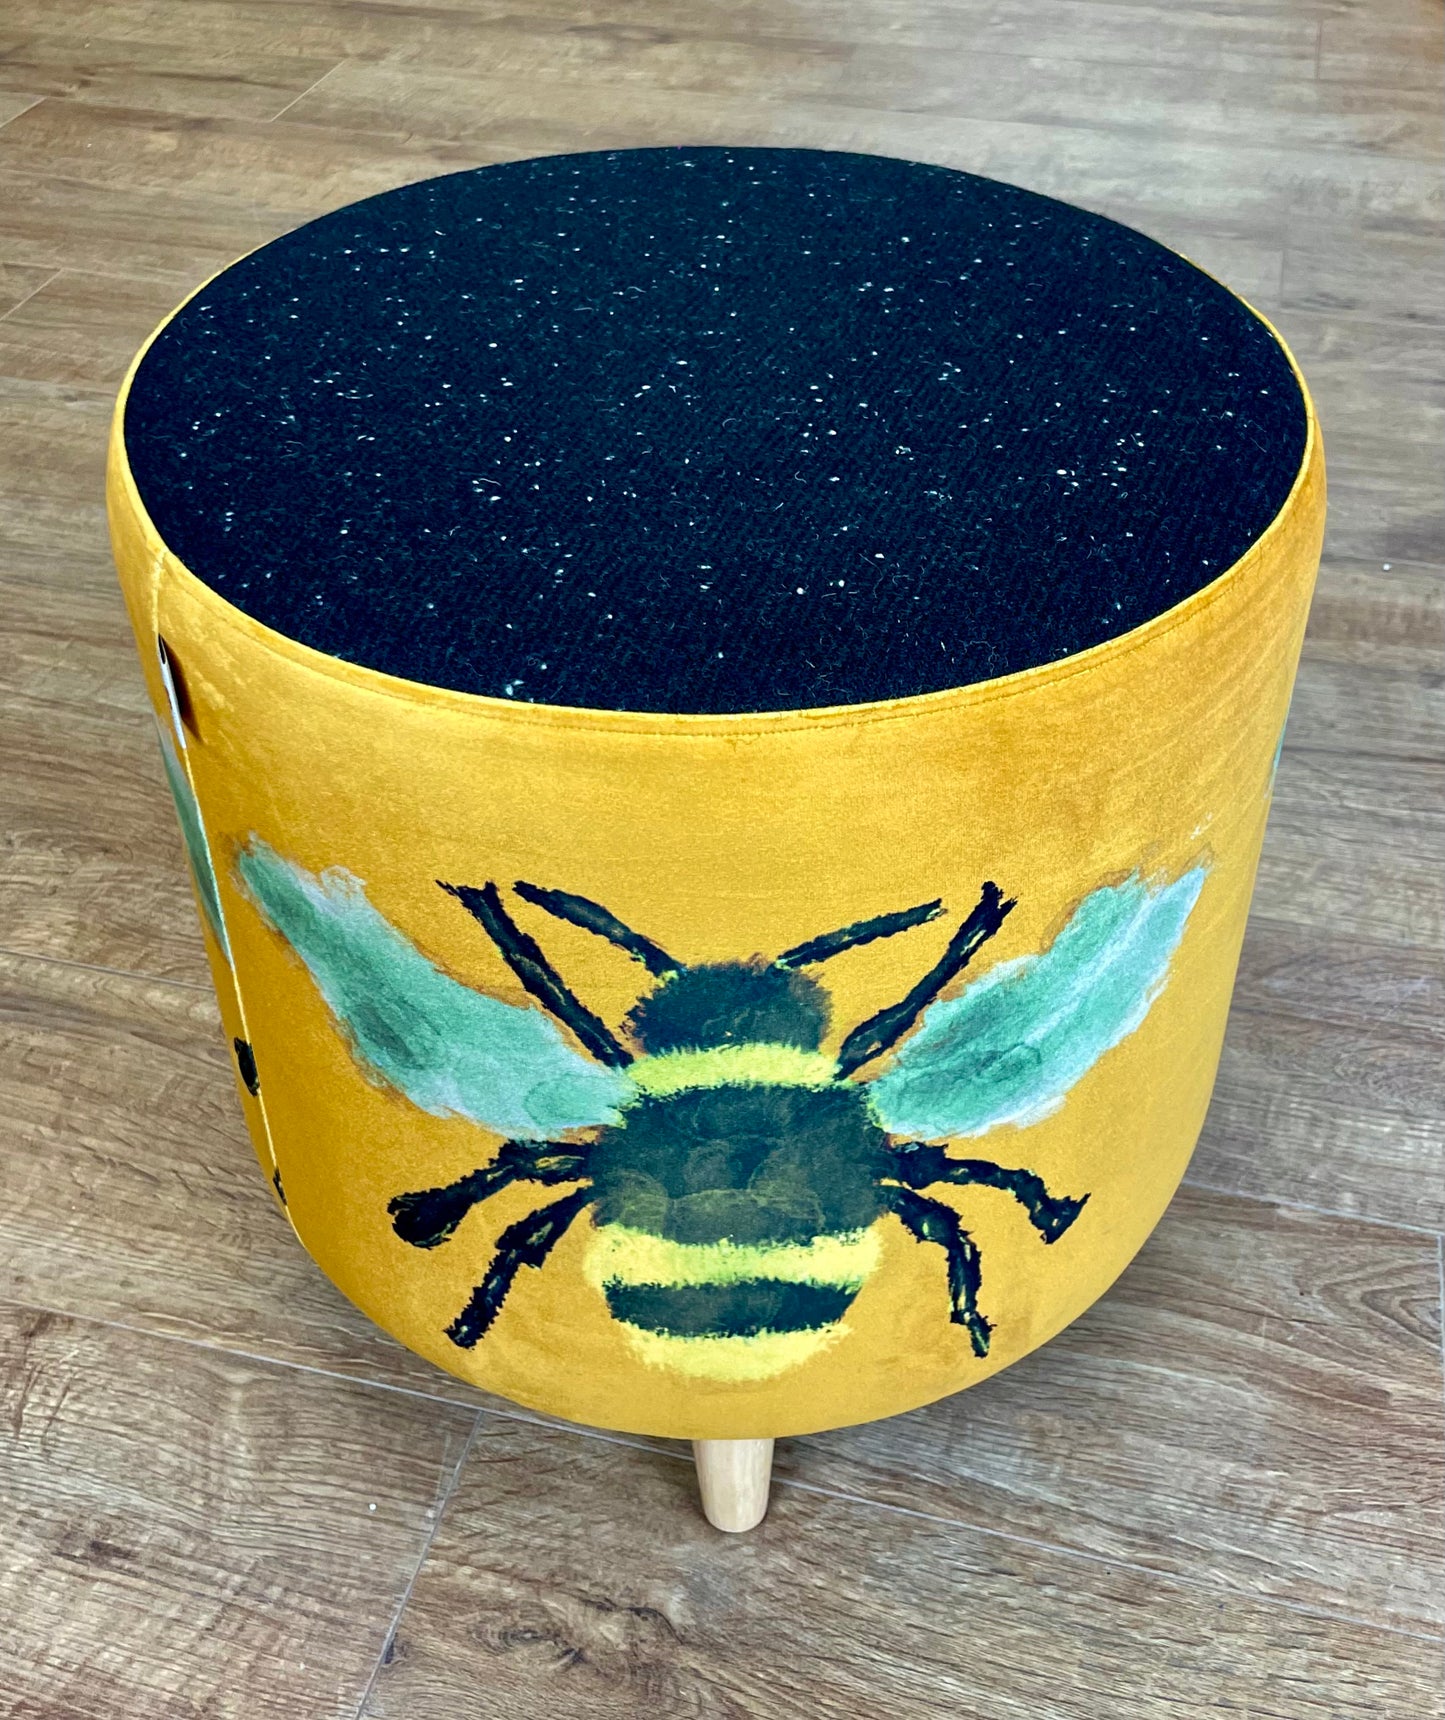 Bumble Bee Footstool with Black Speckled Harris Tweed Top Detail